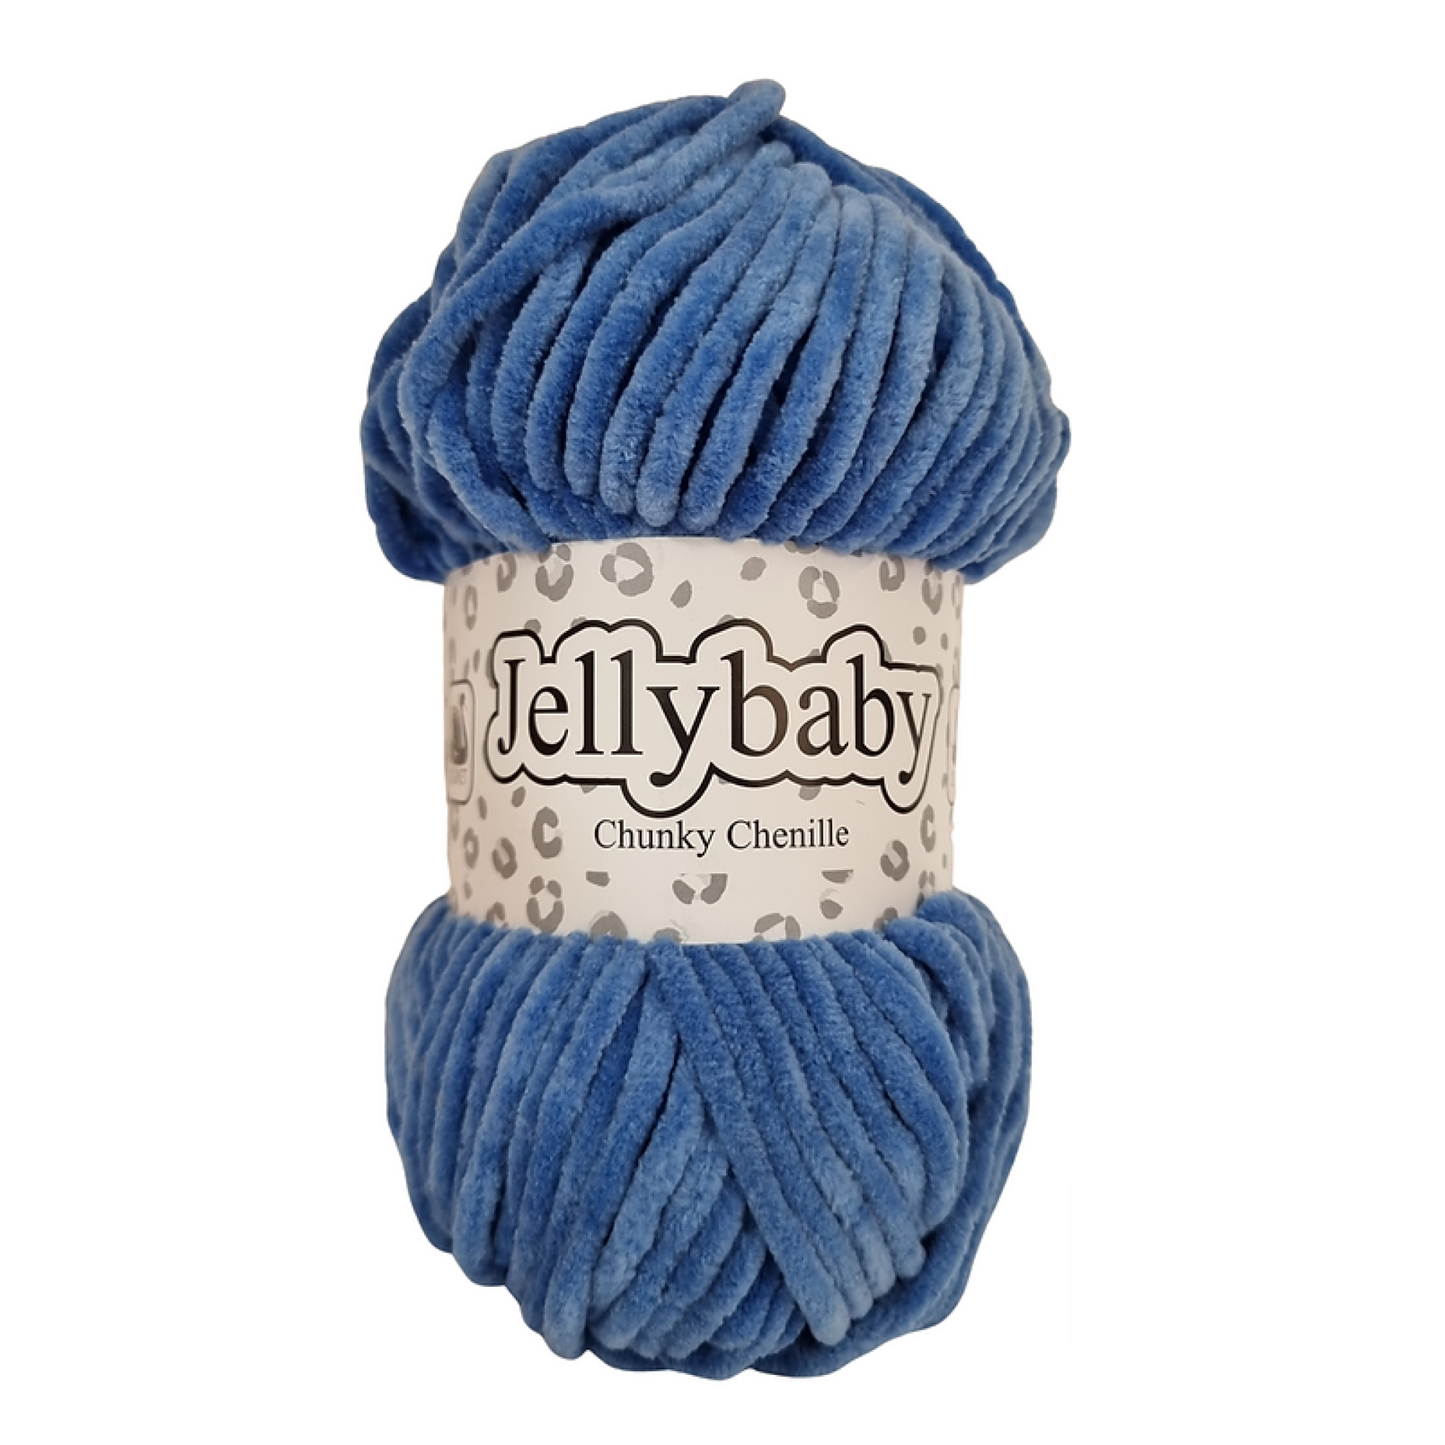 Cygnet Yarns - Jellybaby Chenille - Chunky - 100g Ball - 018 Ultramarine